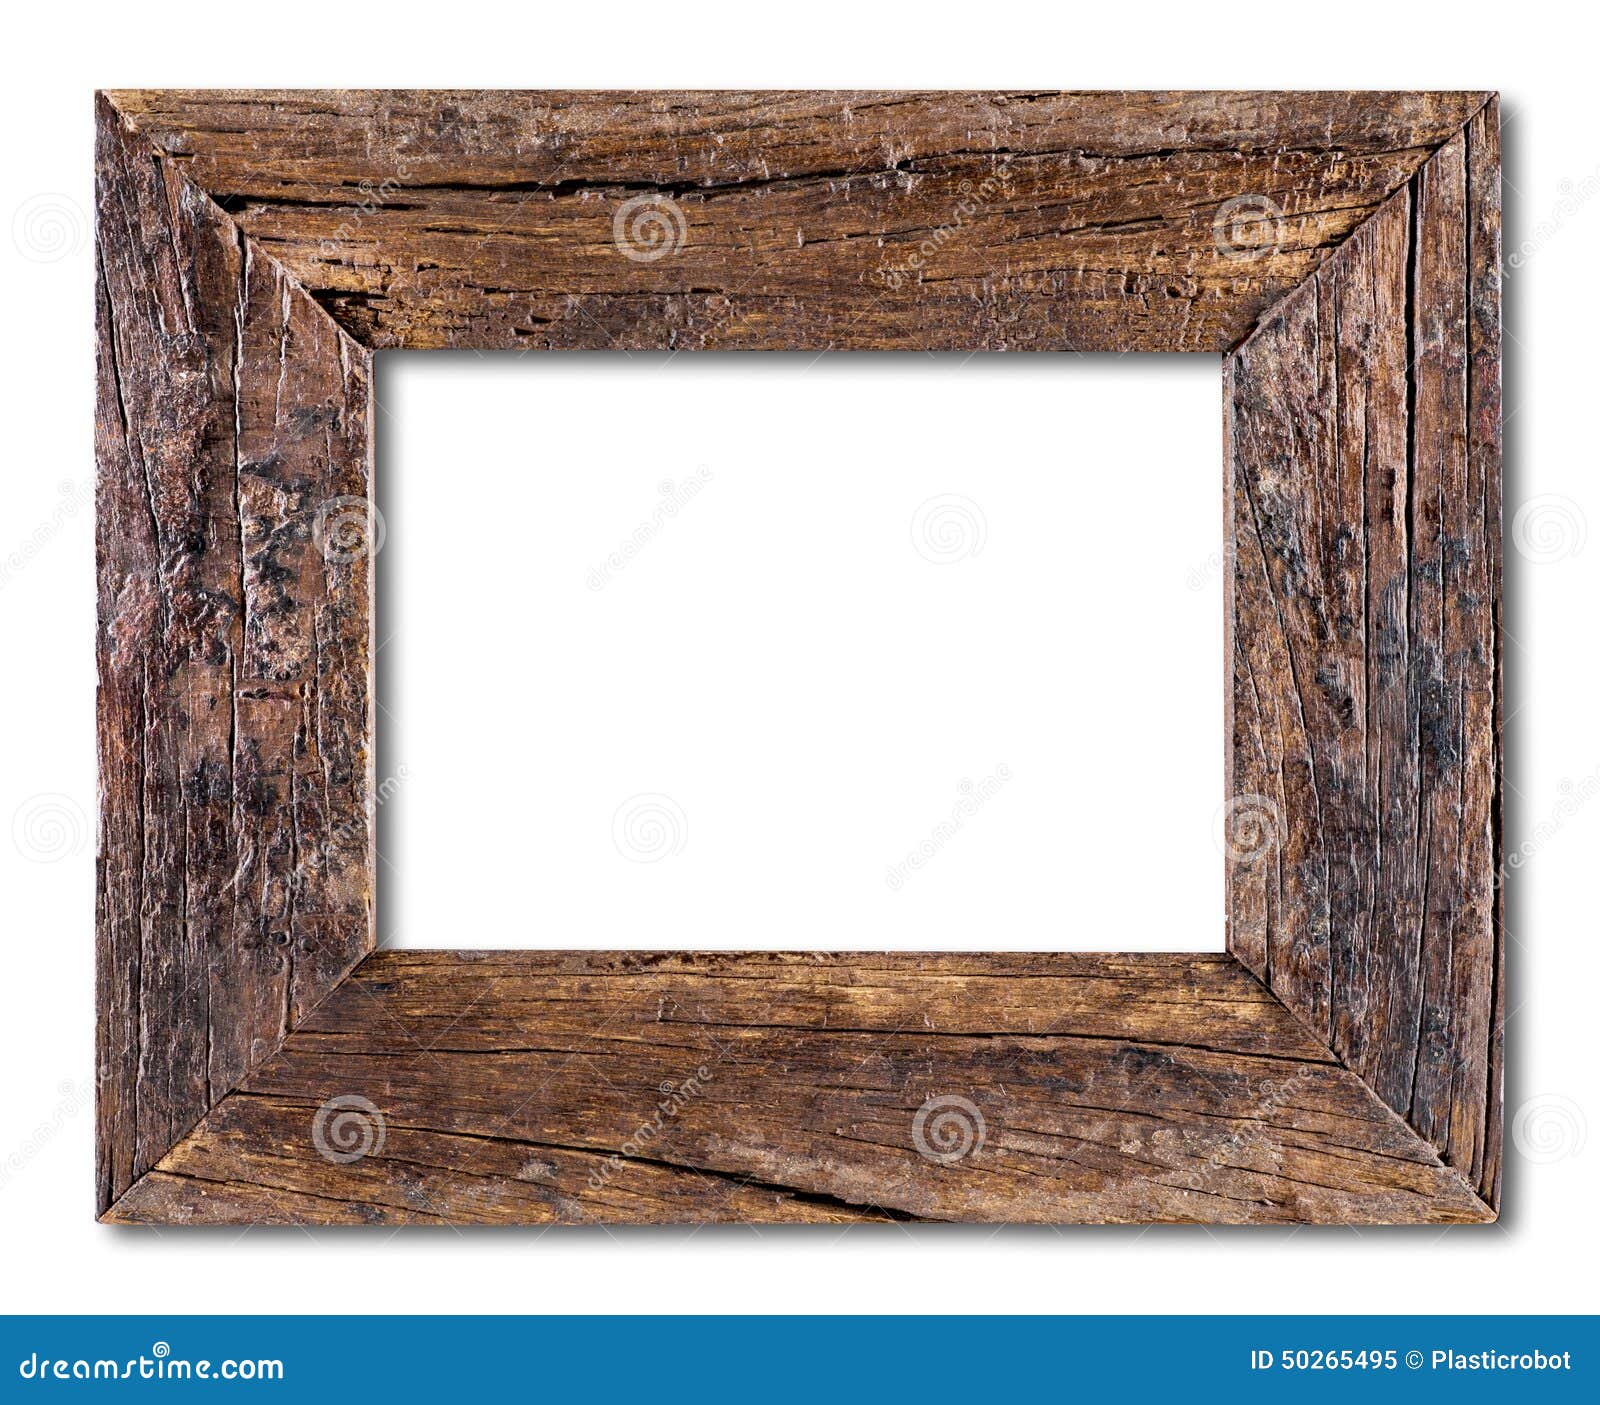 rustic wood frame